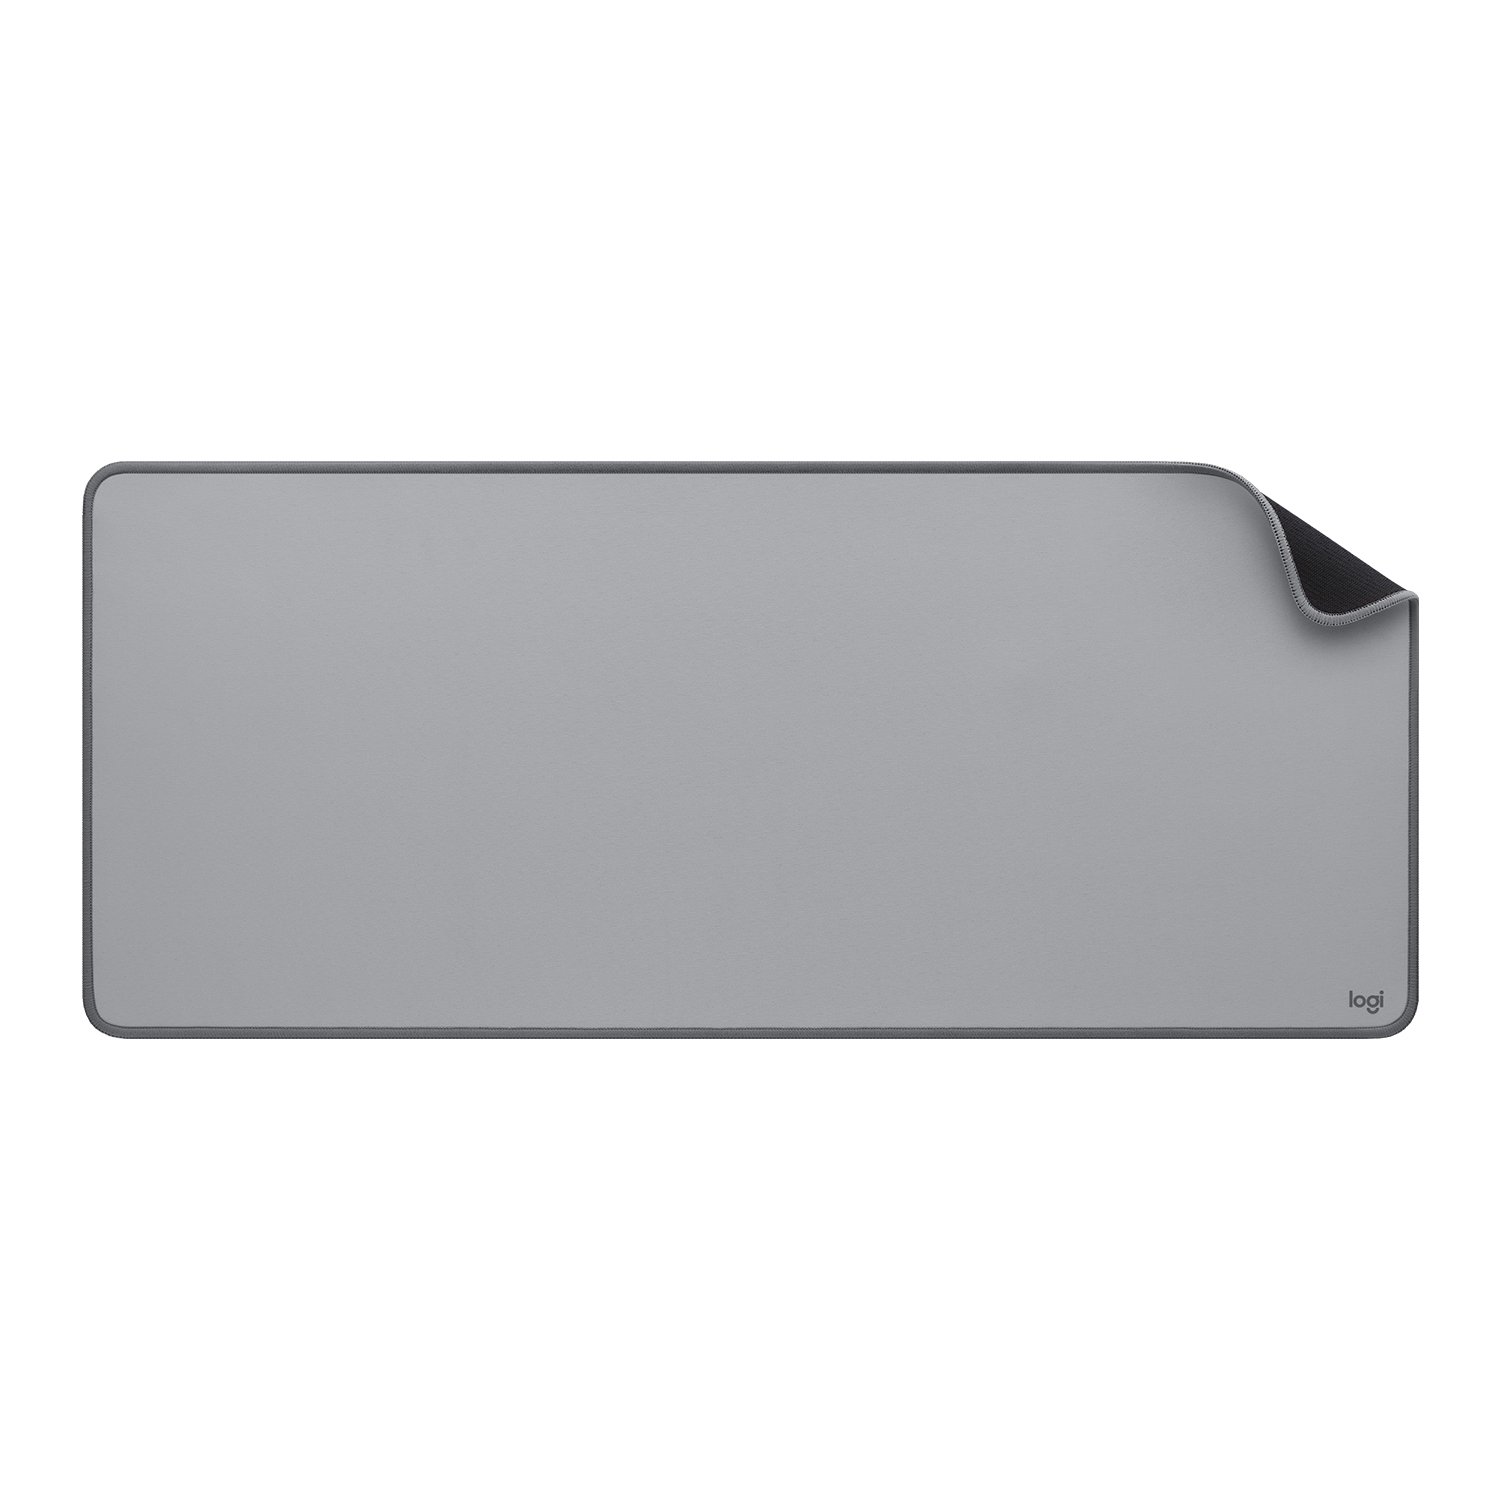 Logitech Mouse pad MPADG / 956-000052 Grey